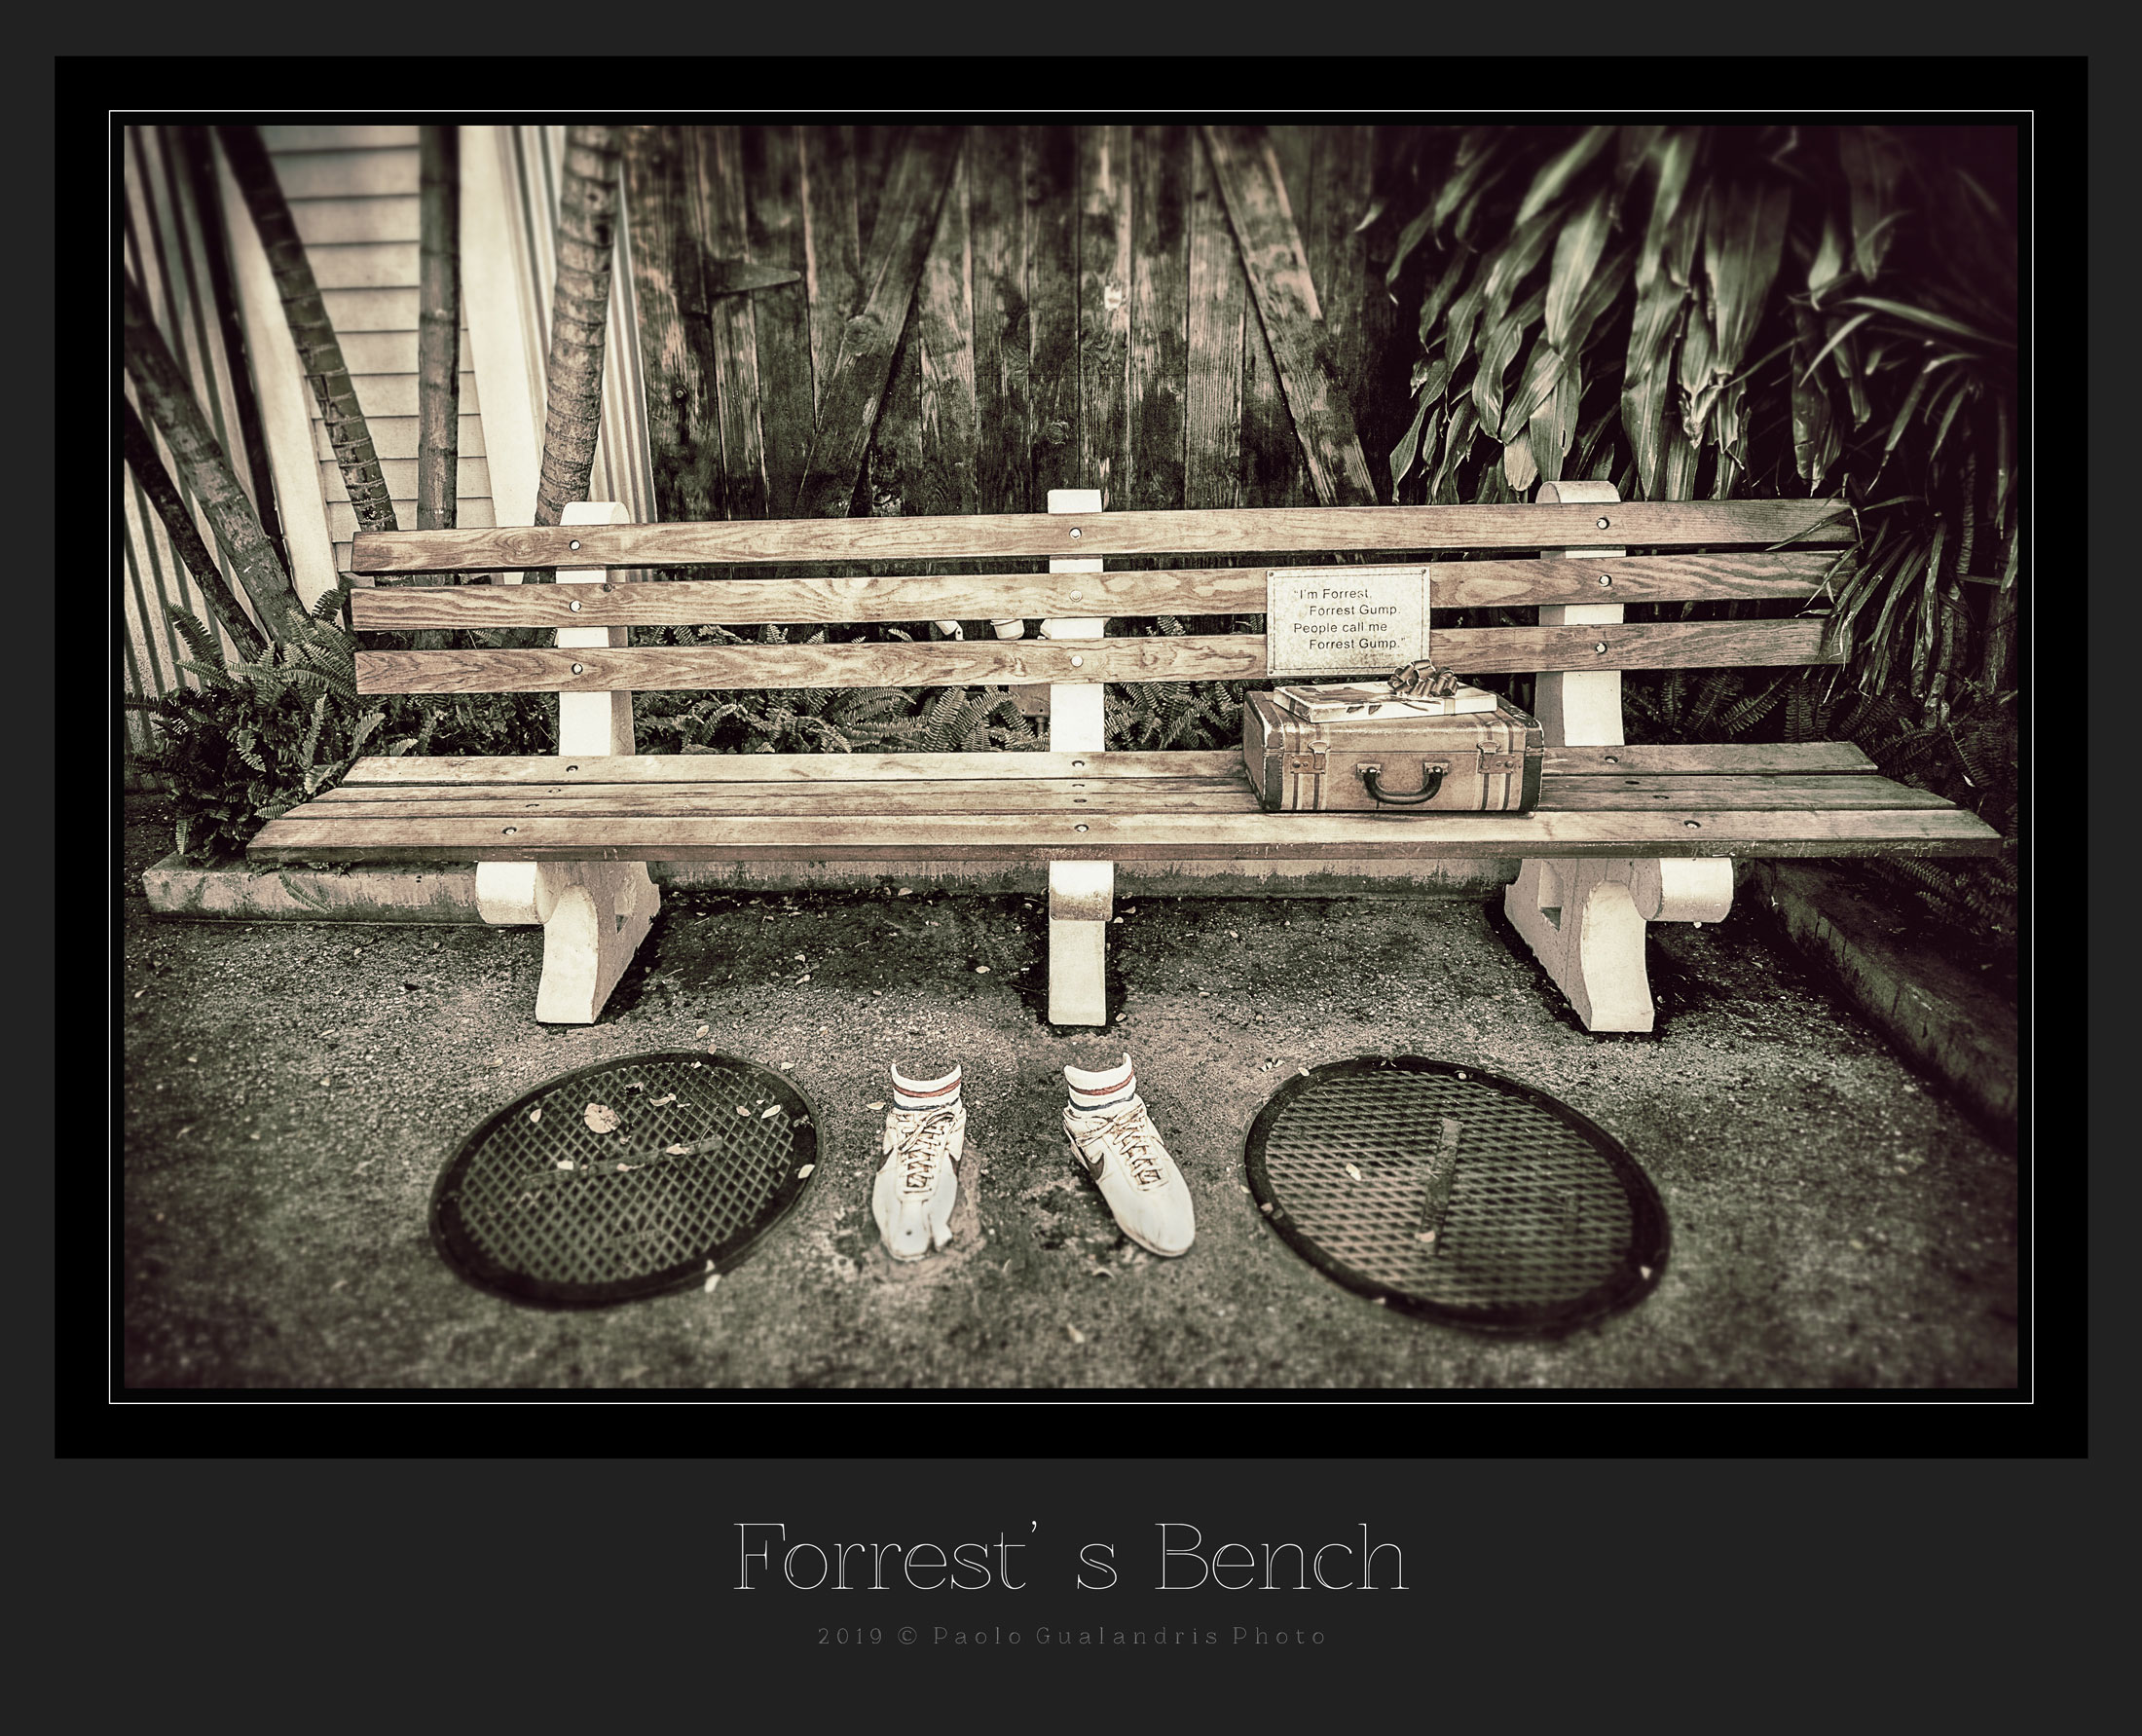 Forrest's Bench...